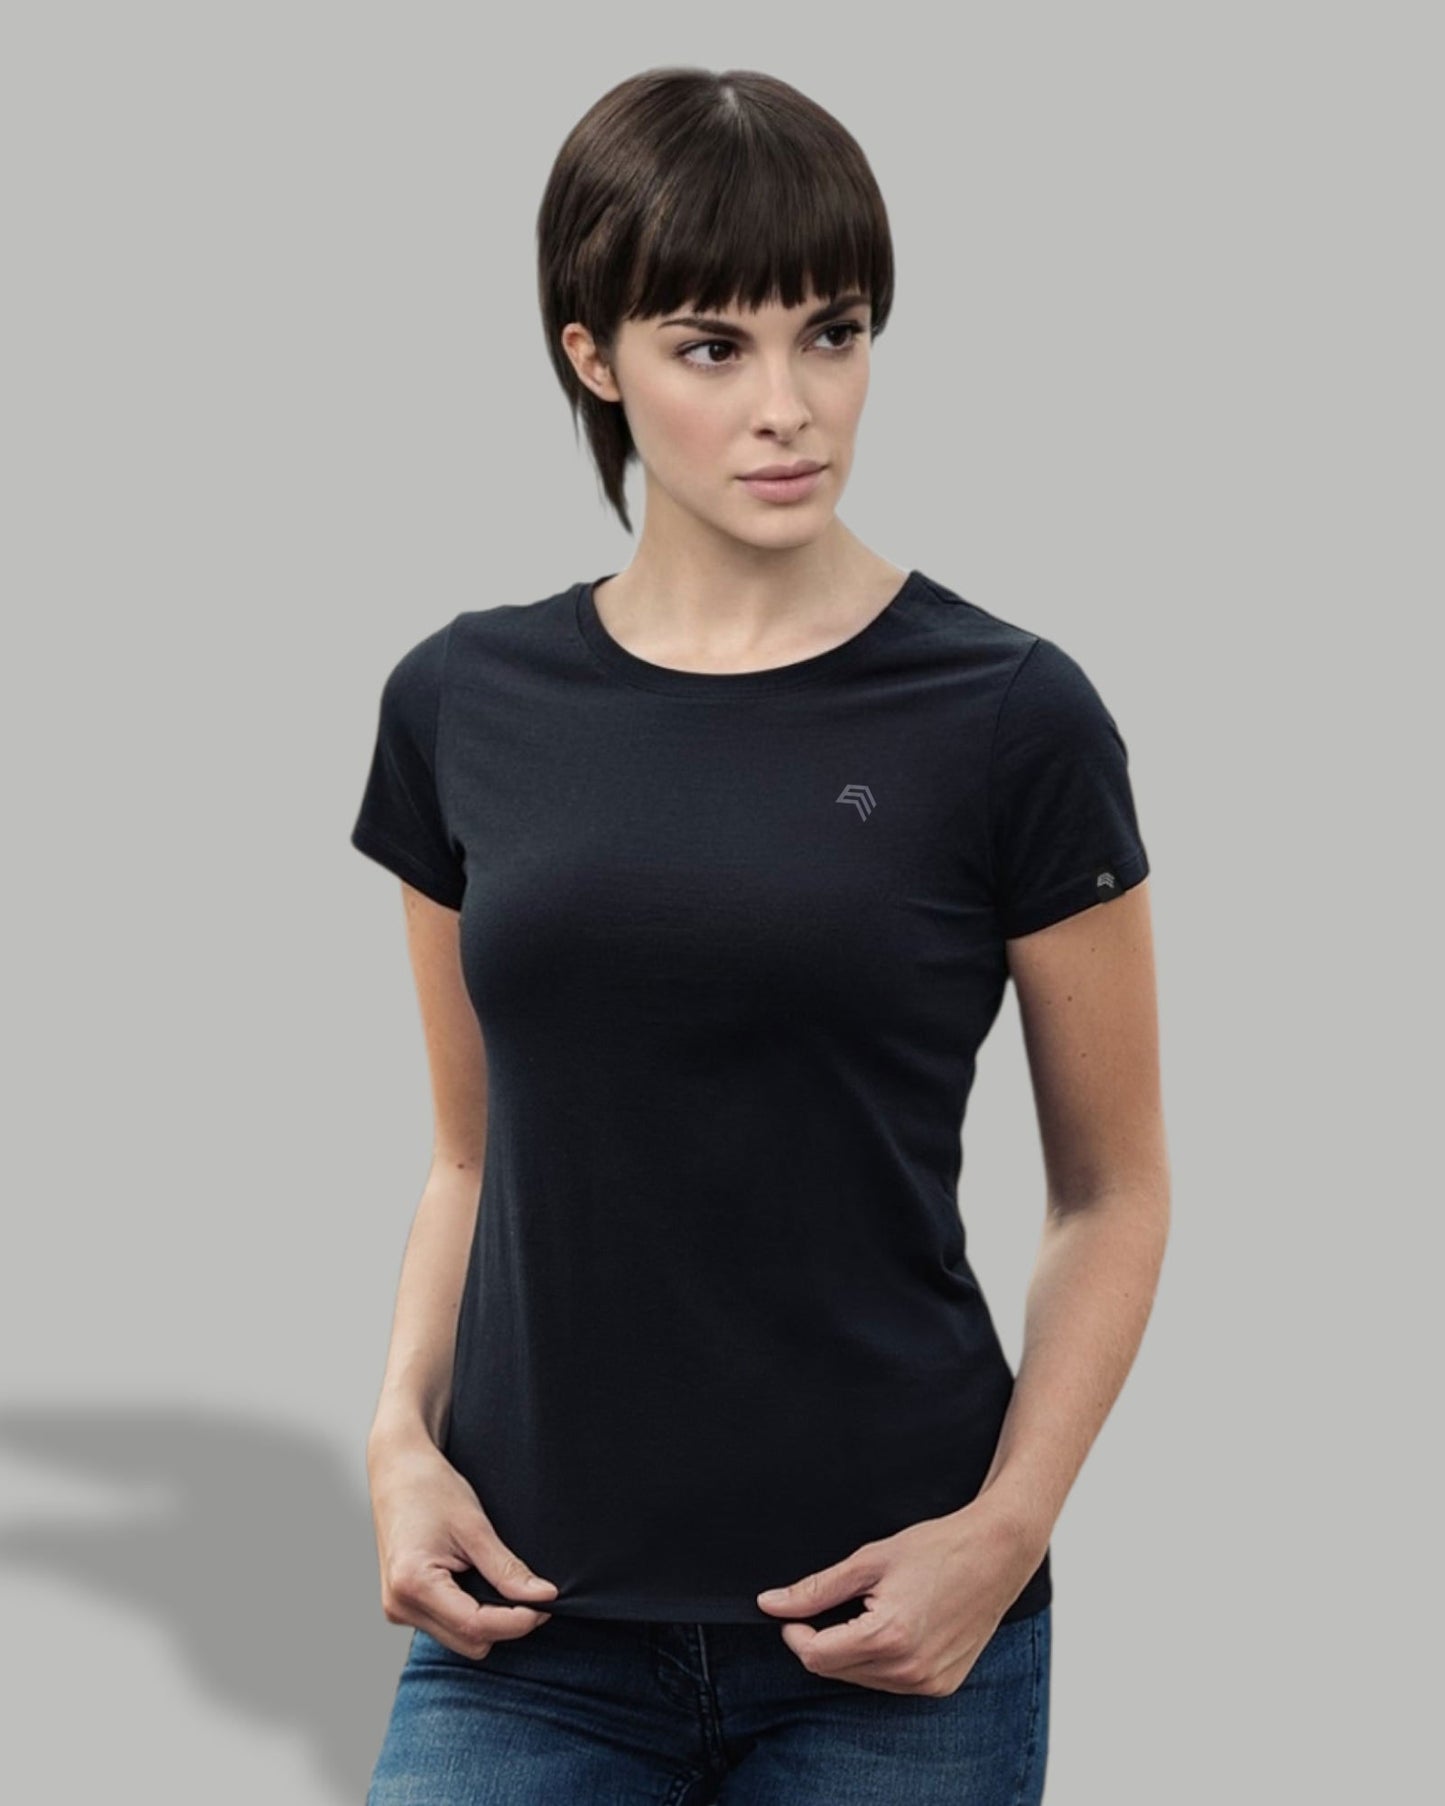 RMH 0201 ― Damen Luxury Bio-Baumwolle T-Shirt - Dark Grau